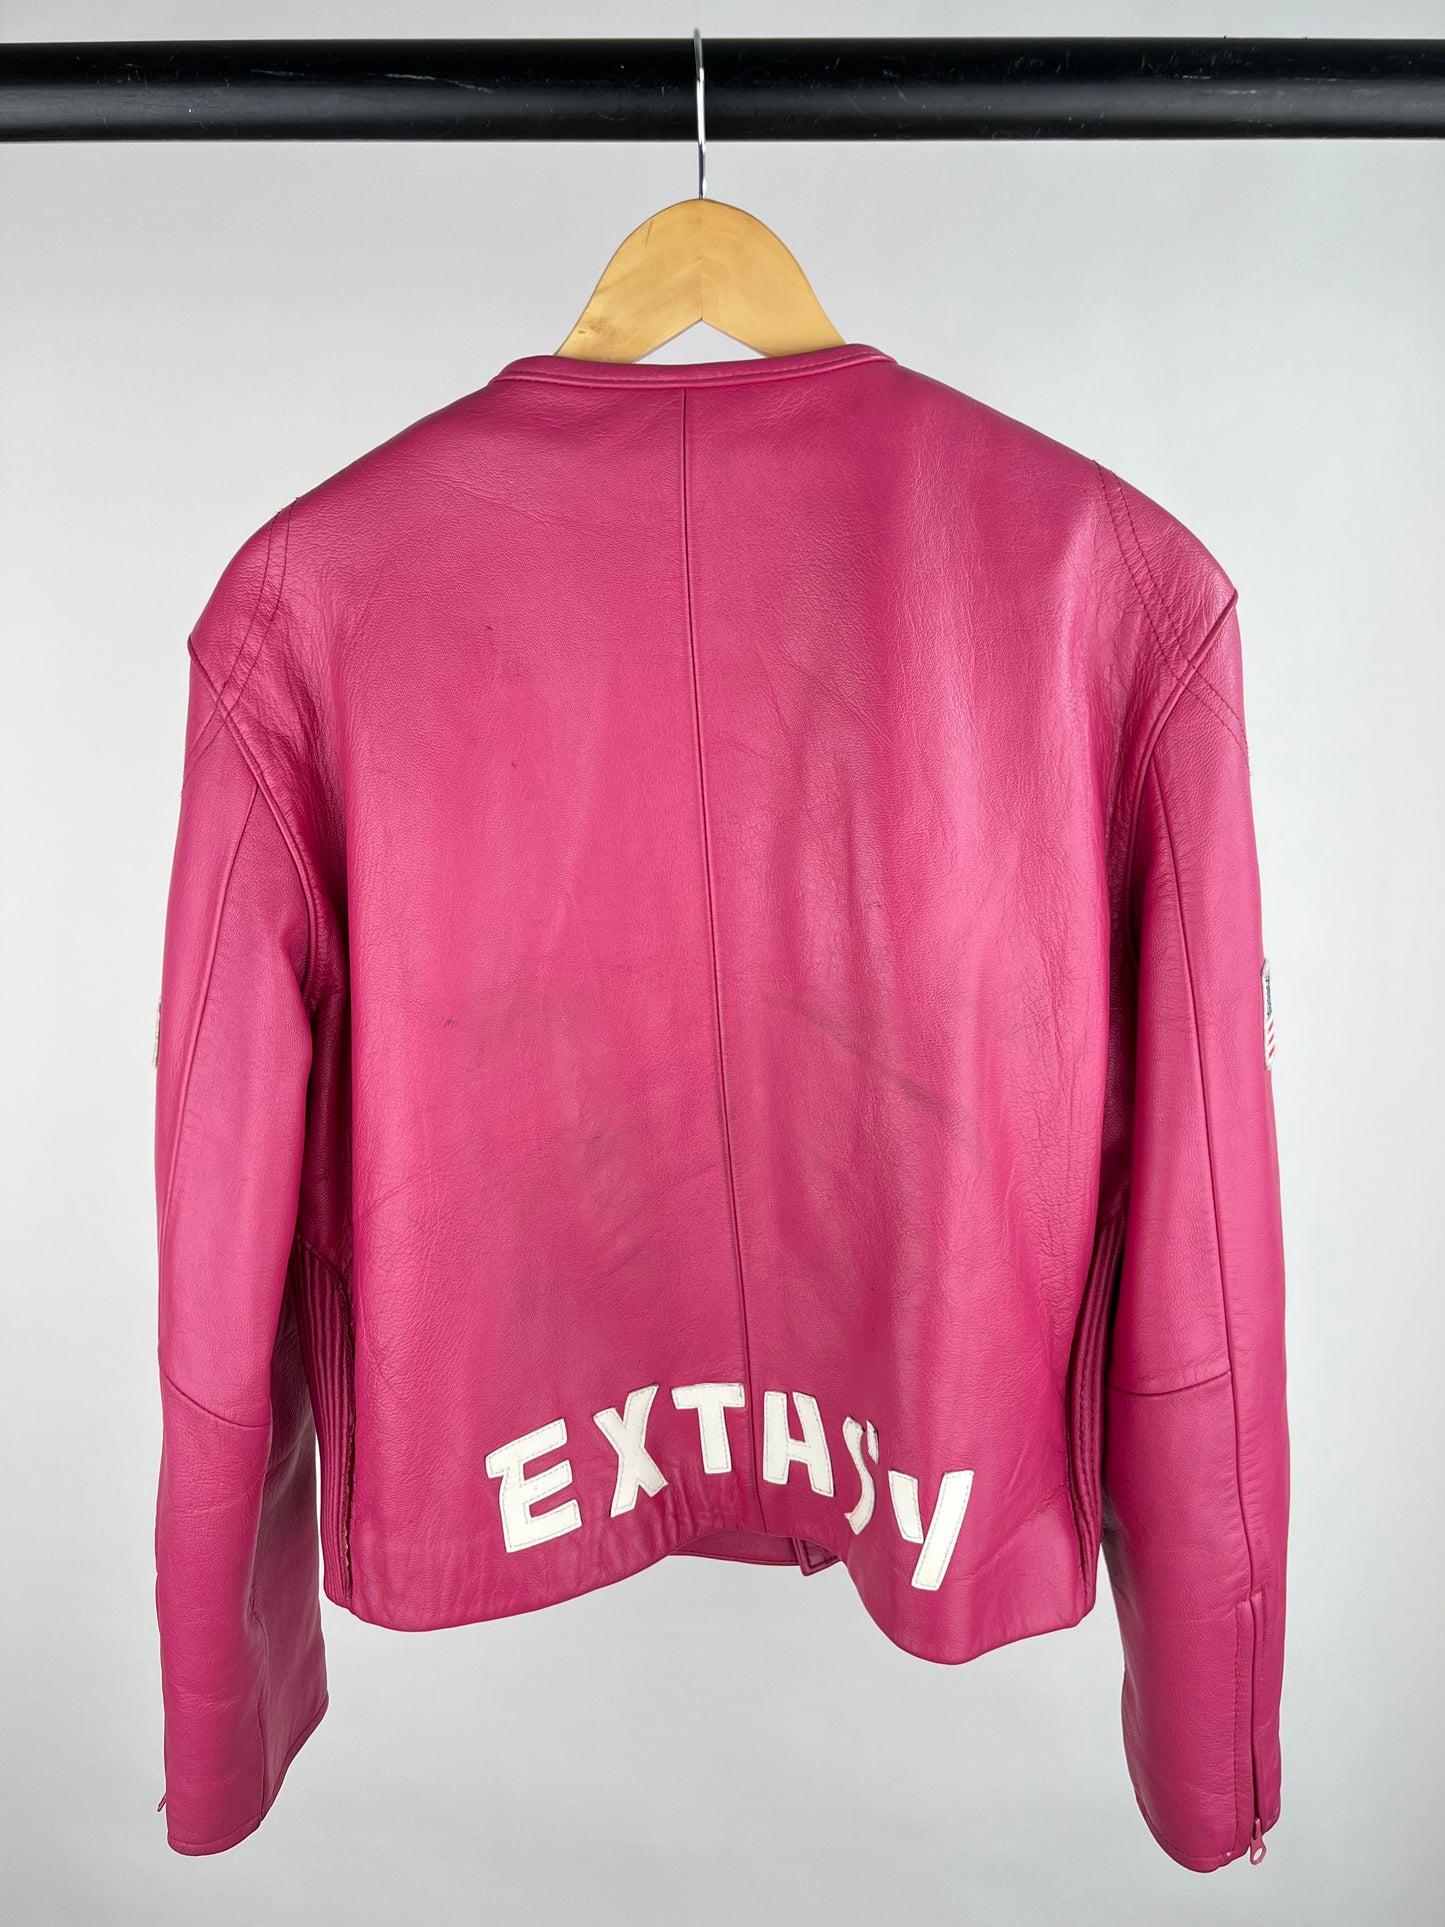 Extasy James & John 90s Leather Biker Jacket